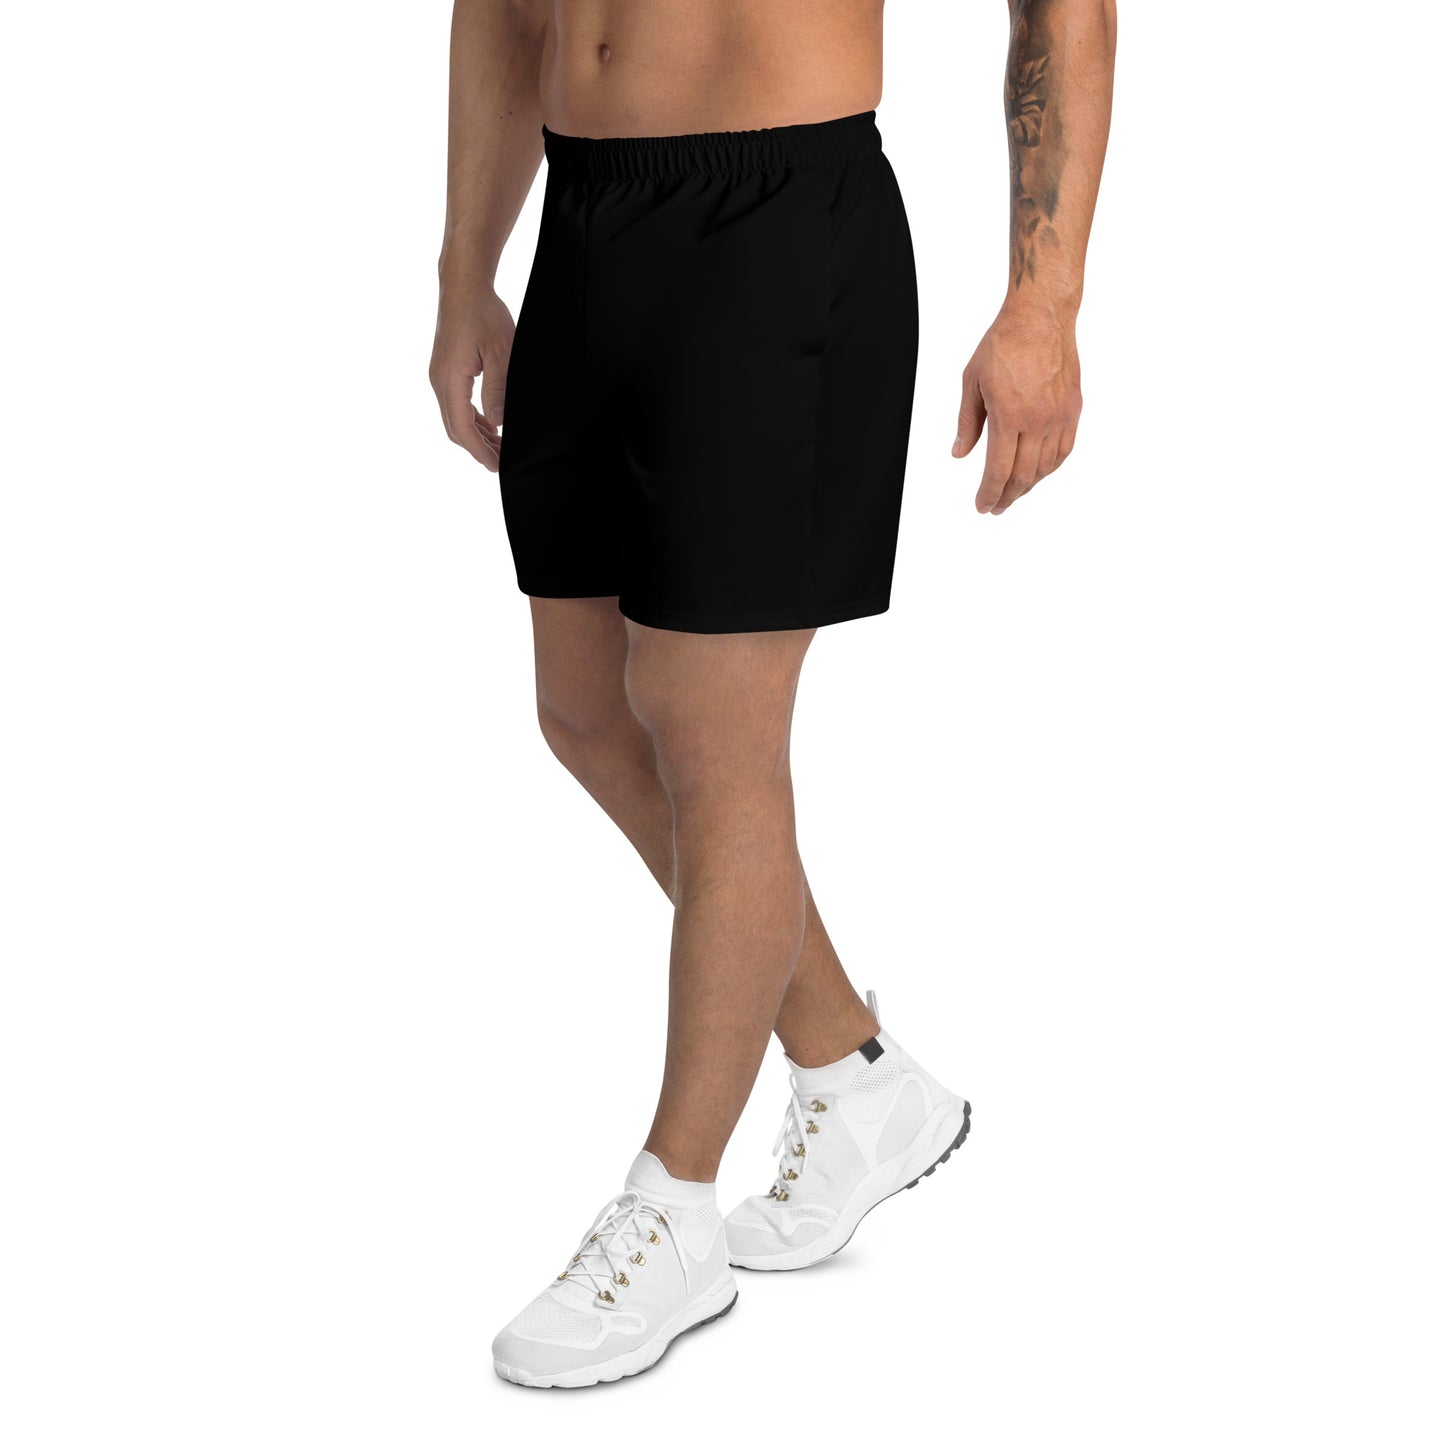 SISU - Men's Recycled Athletic Shorts -Black